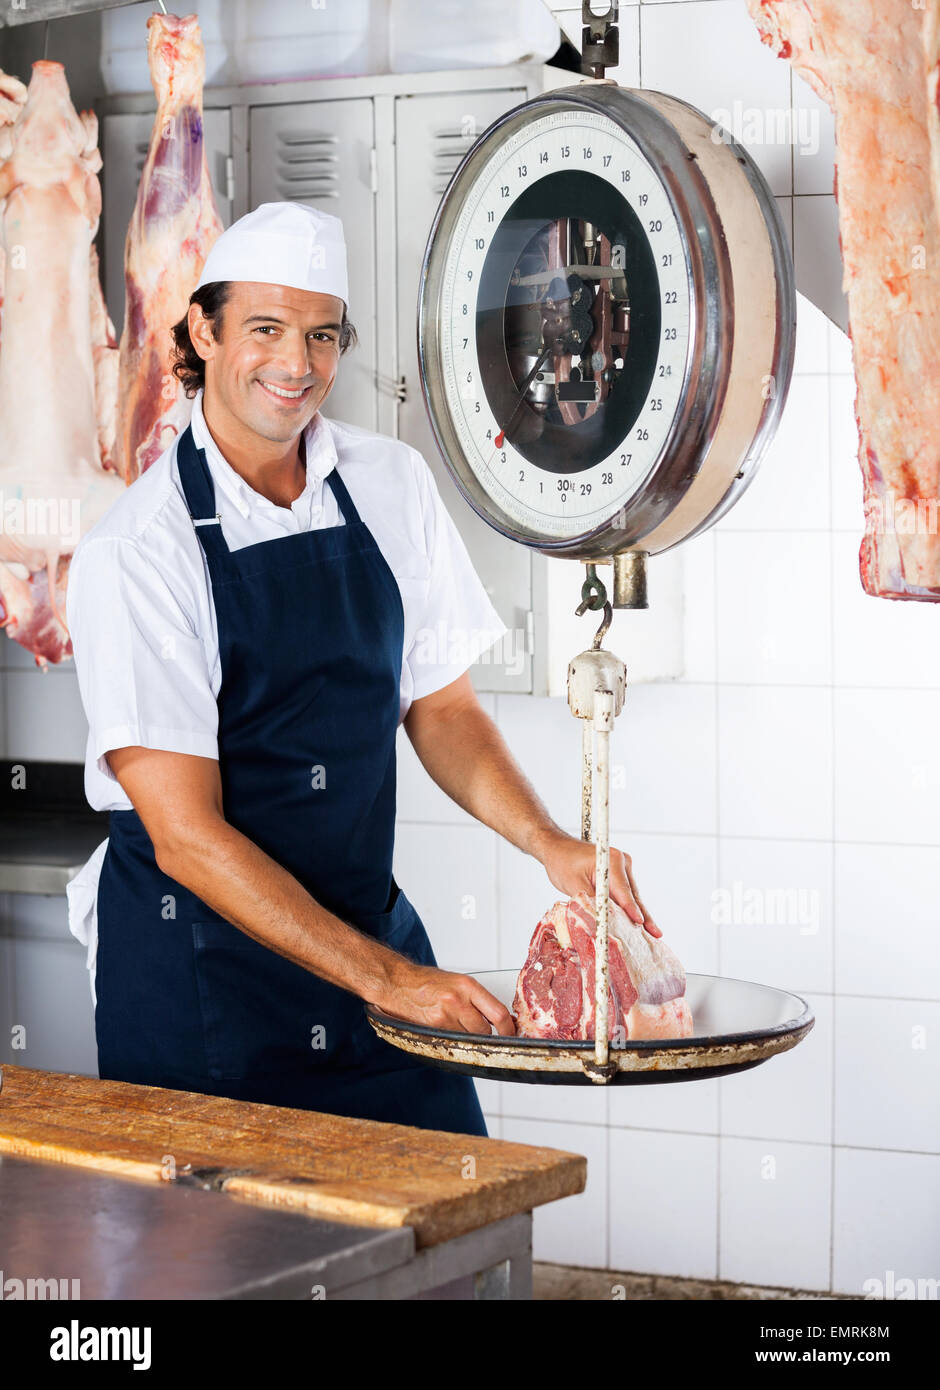 https://c8.alamy.com/comp/EMRK8M/confident-butcher-weighing-meat-on-scale-EMRK8M.jpg